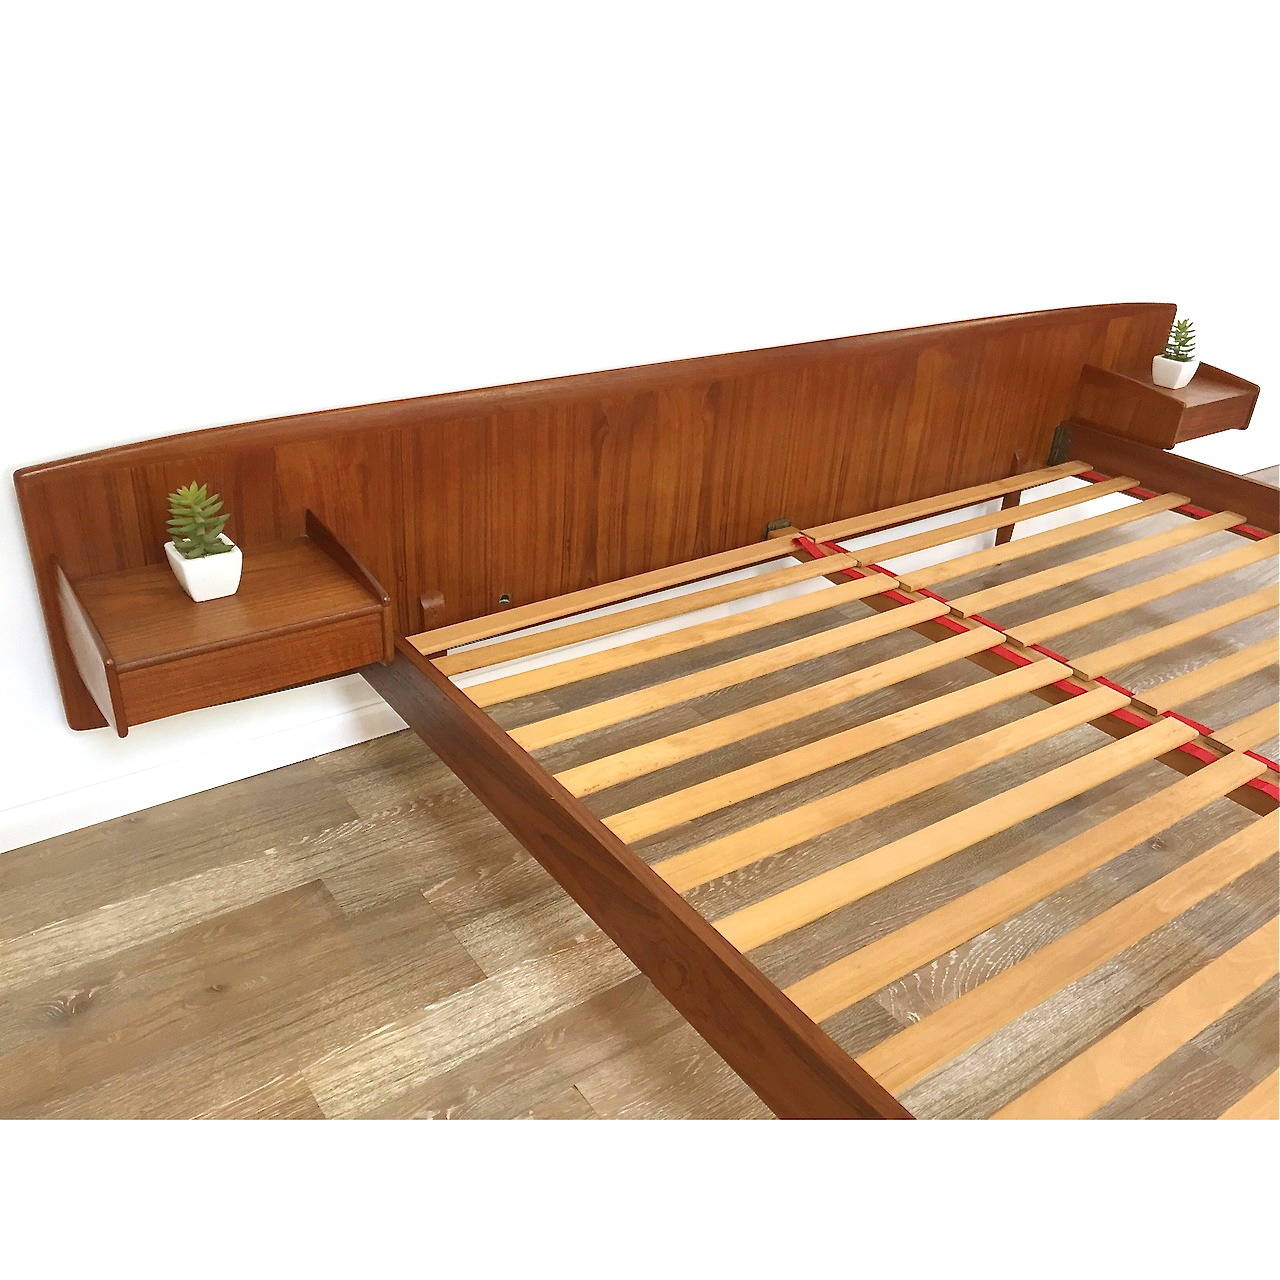 Mid-20th Century Danish Modern Teak California King Platform Bed with Floating Nightstands